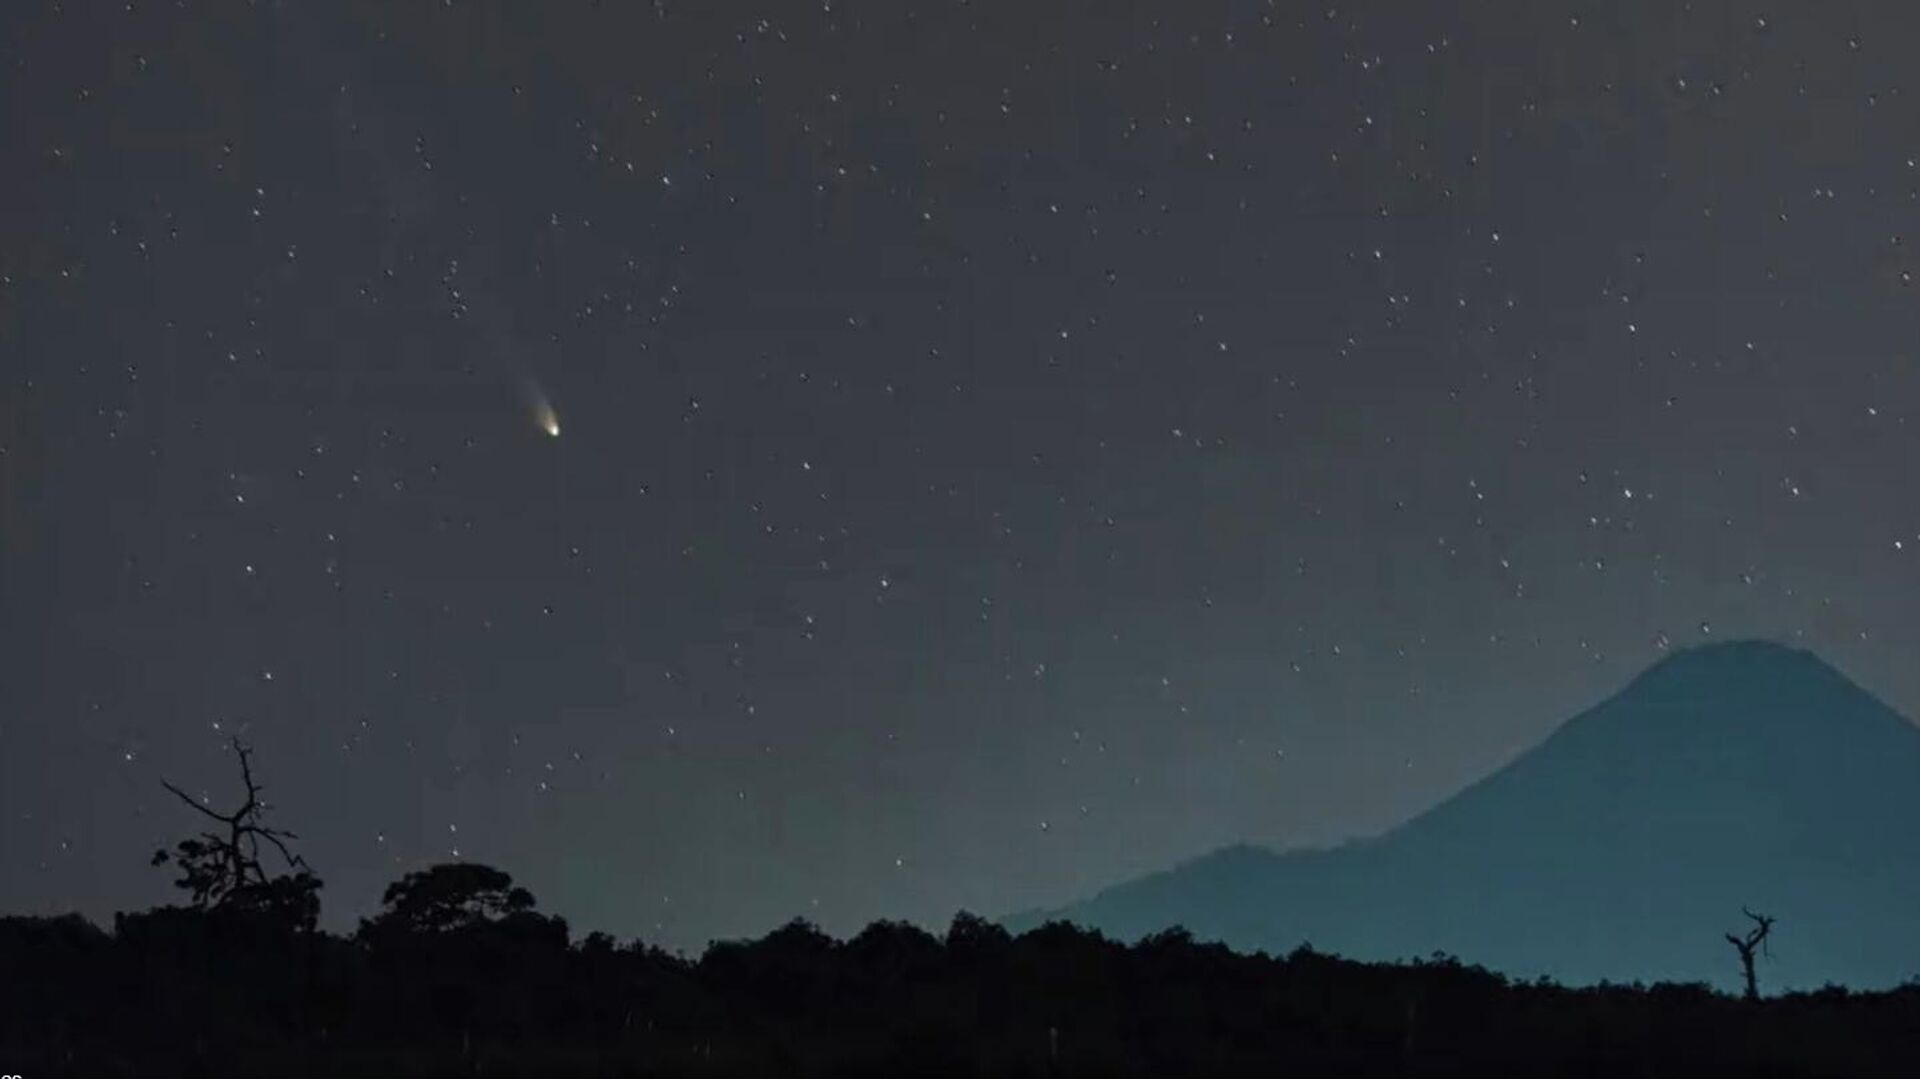 El cometa Leonard visto desde el centro de México.  - Sputnik Mundo, 1920, 27.12.2021